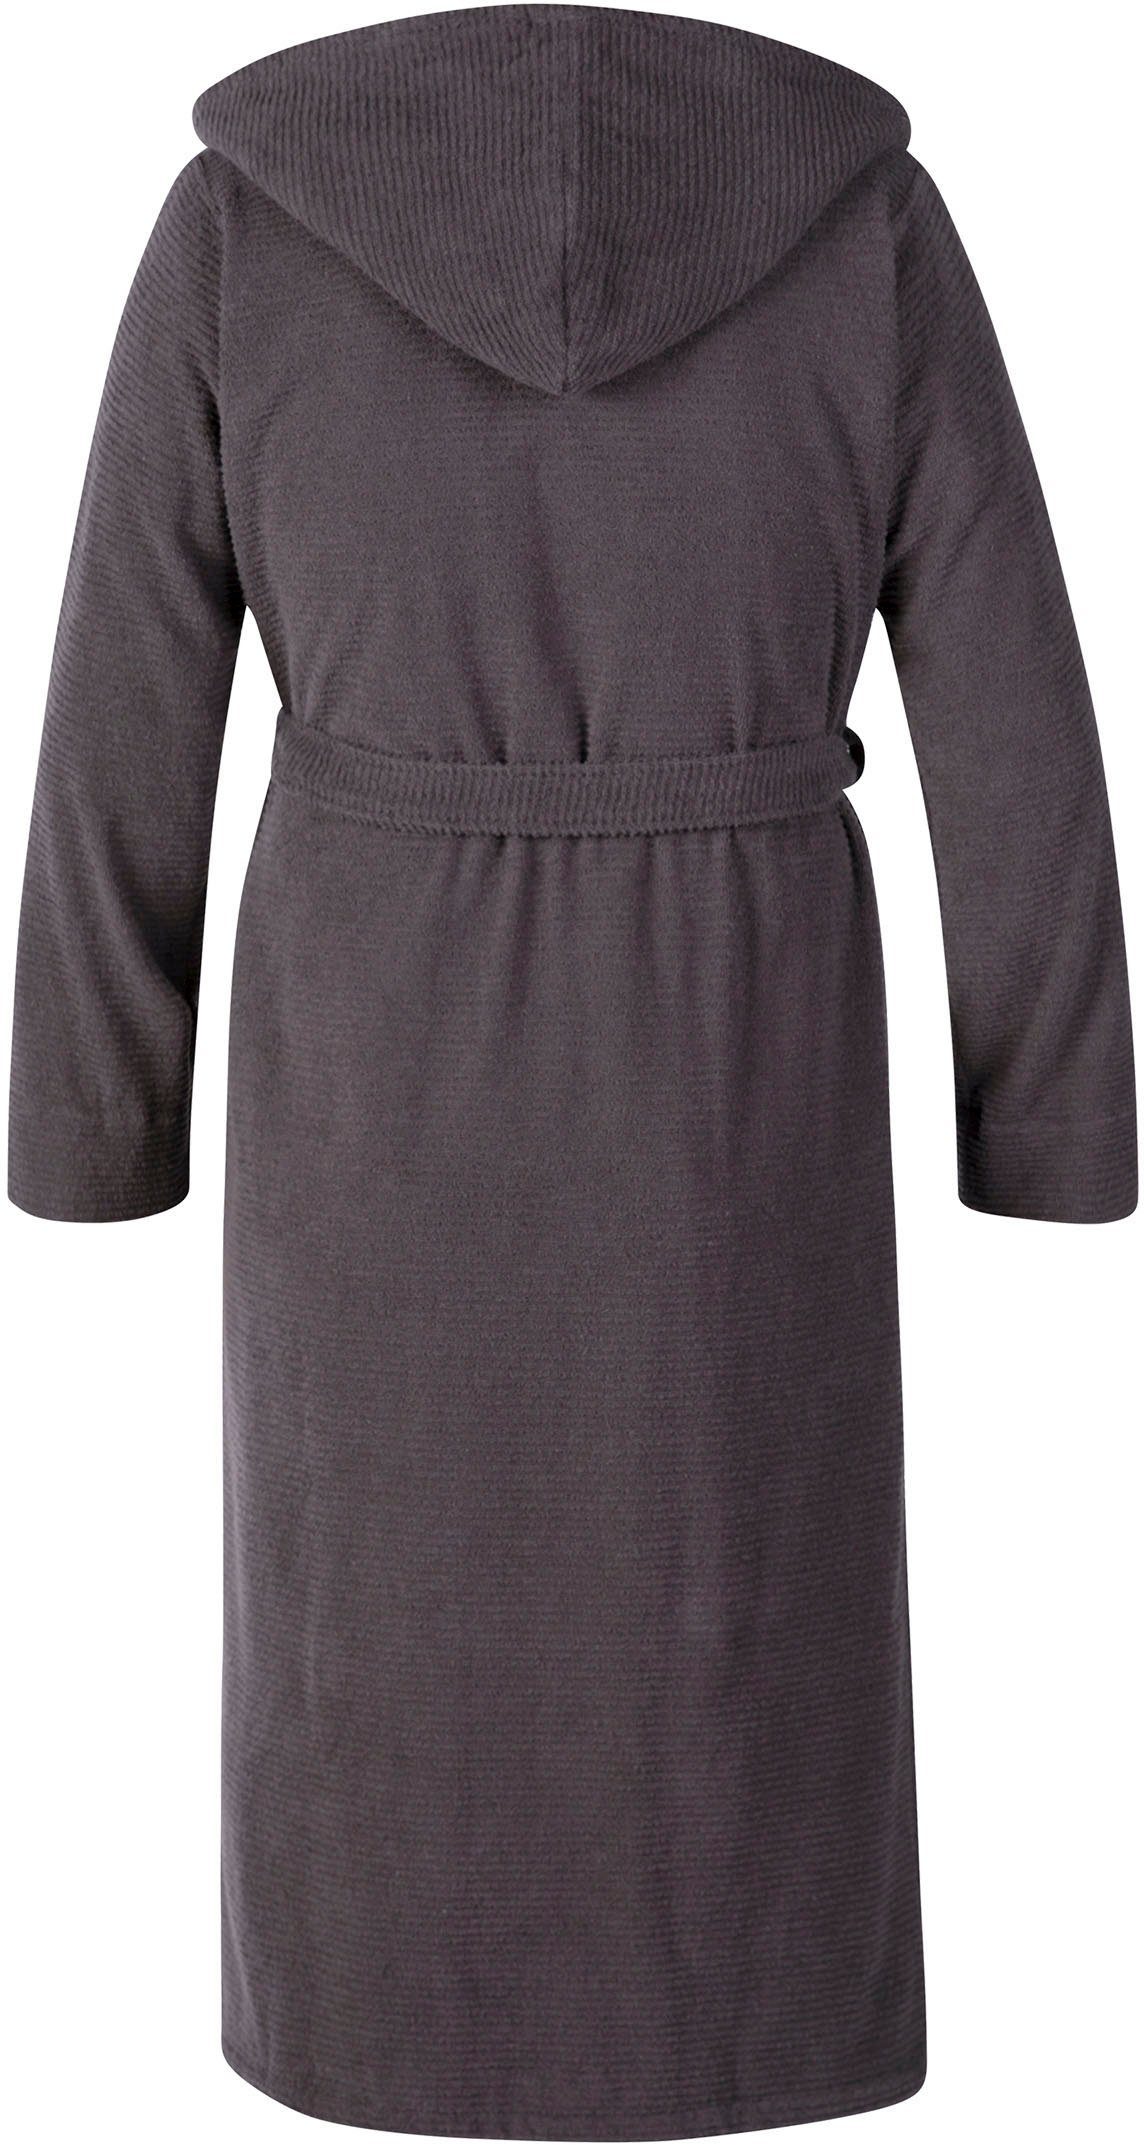 Möve Kimono Gürtel, Wellbeing, Kimono-Kragen, Uni graphit in Baumwoll-Webfrottier, modernem Langform